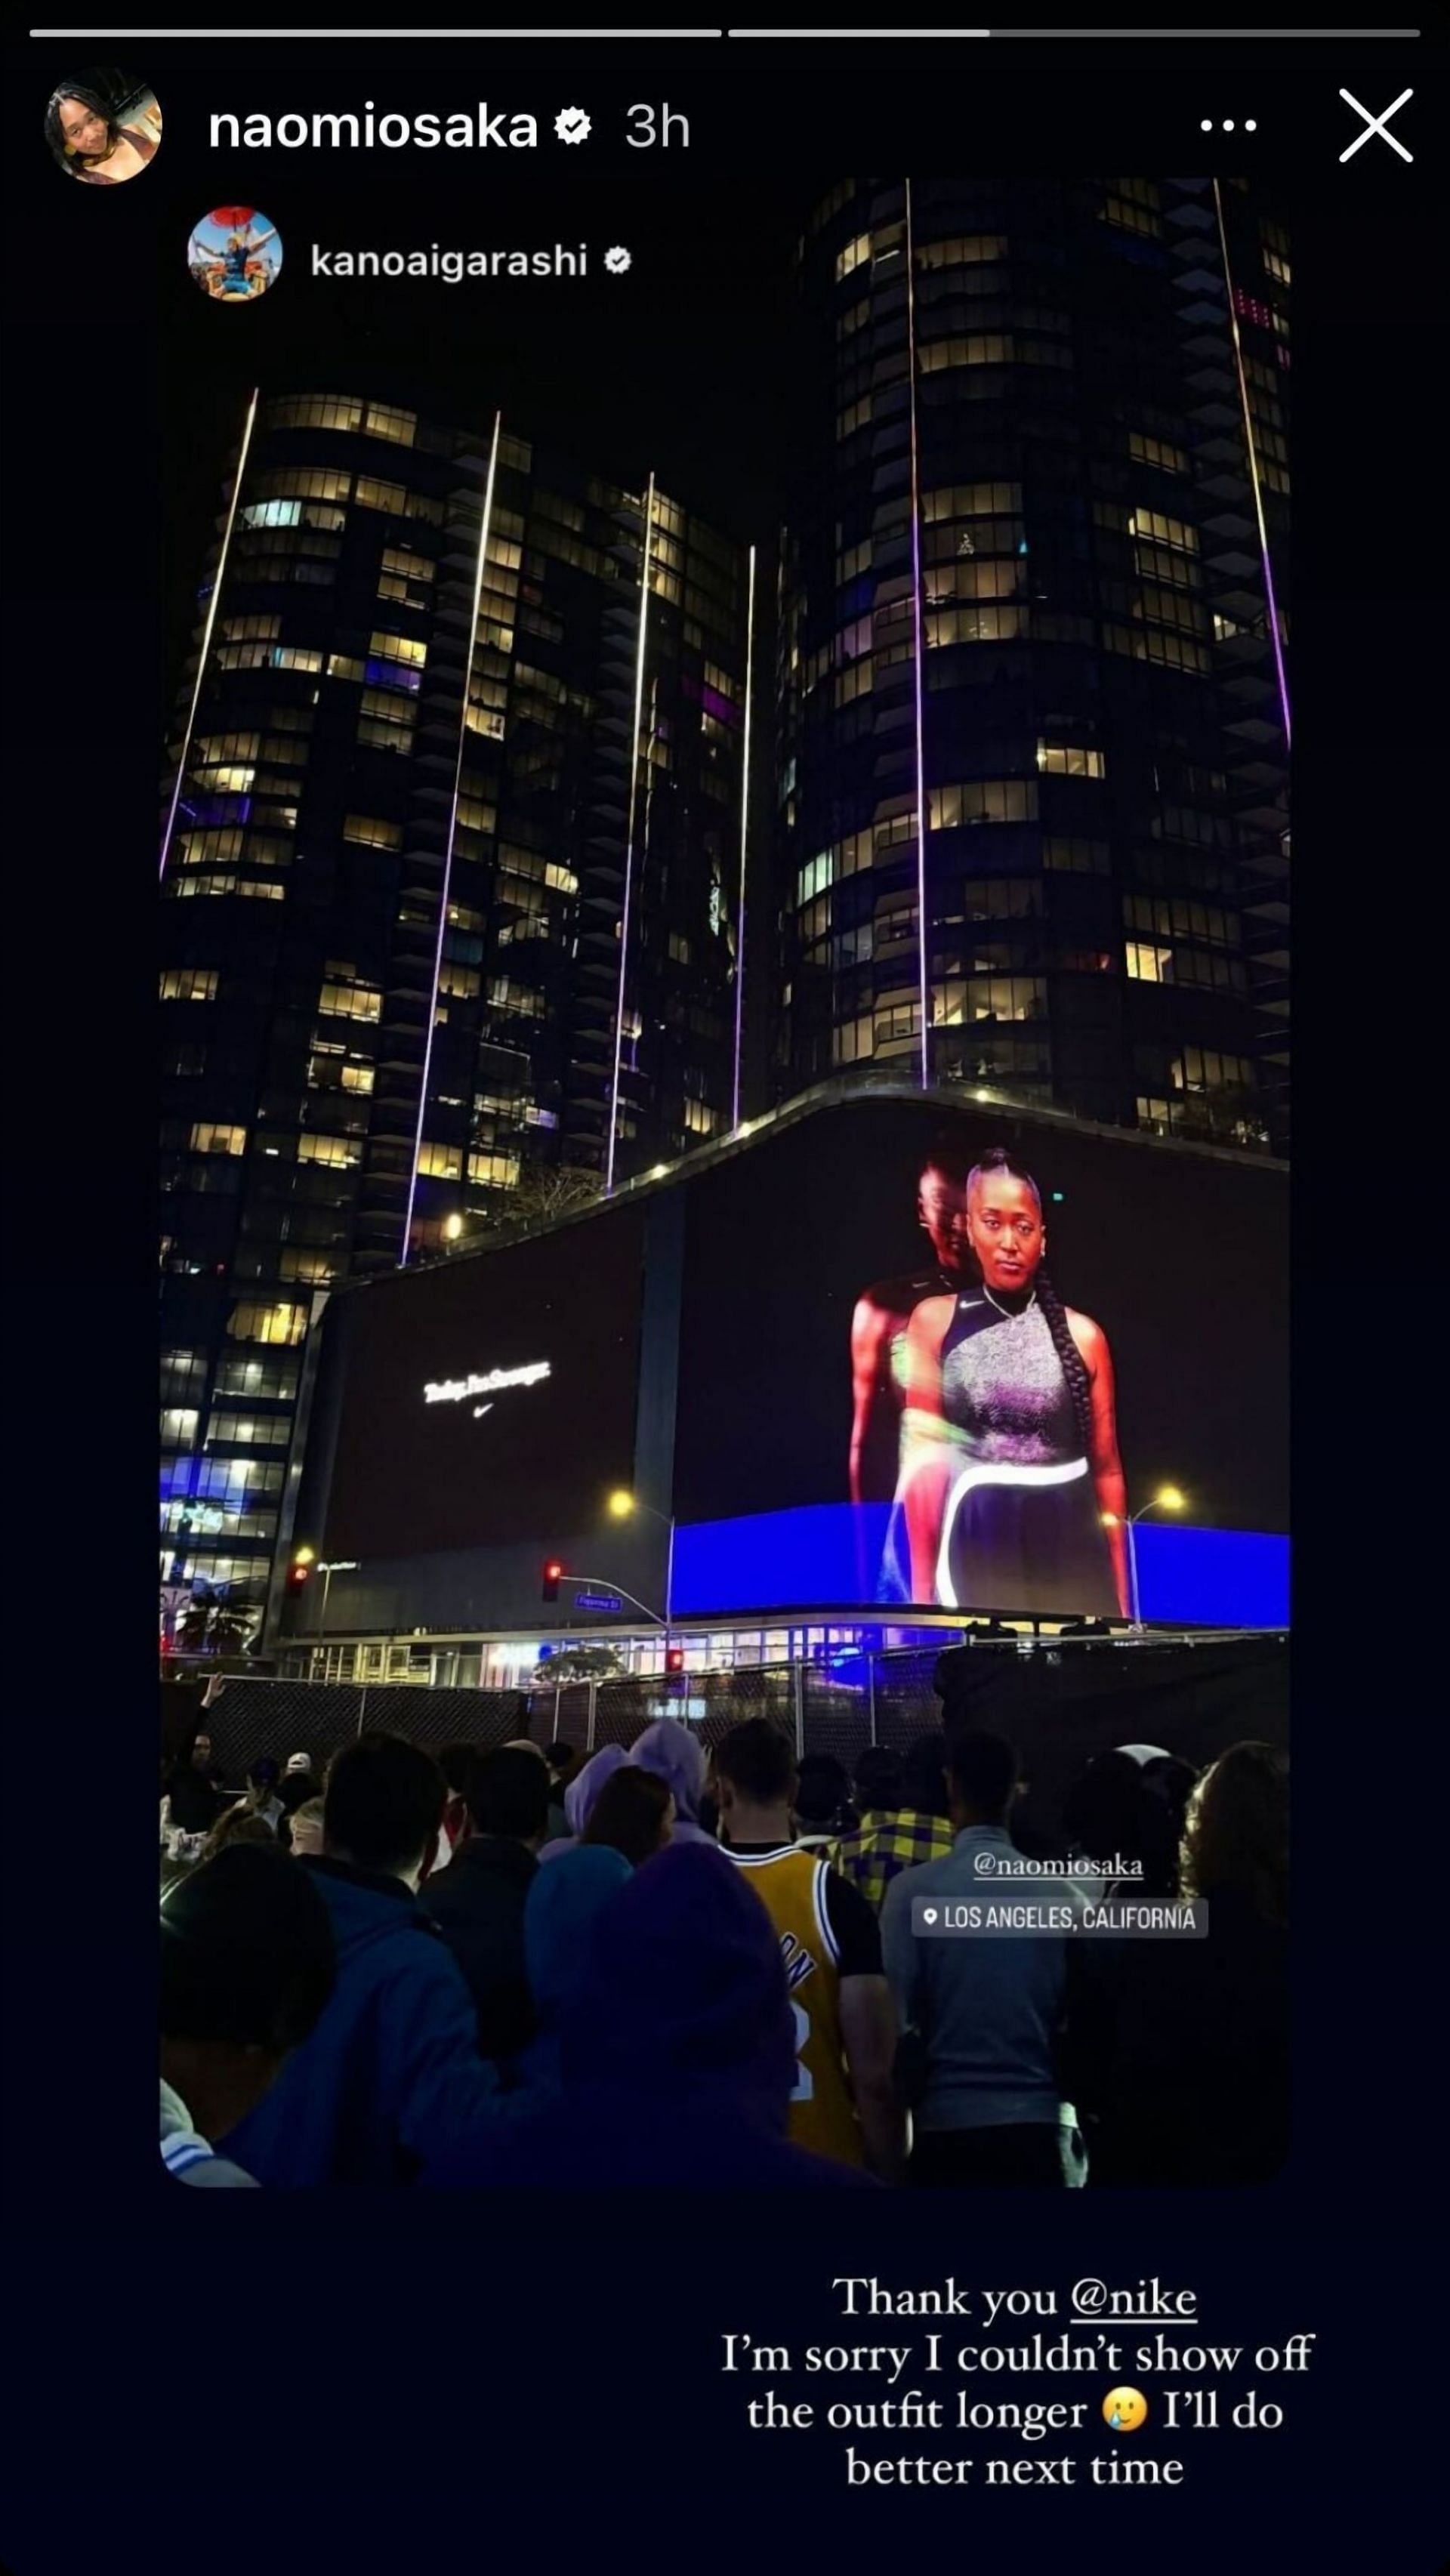 Naomi Osaka sends a gracious message to her outfit sponsor Nike